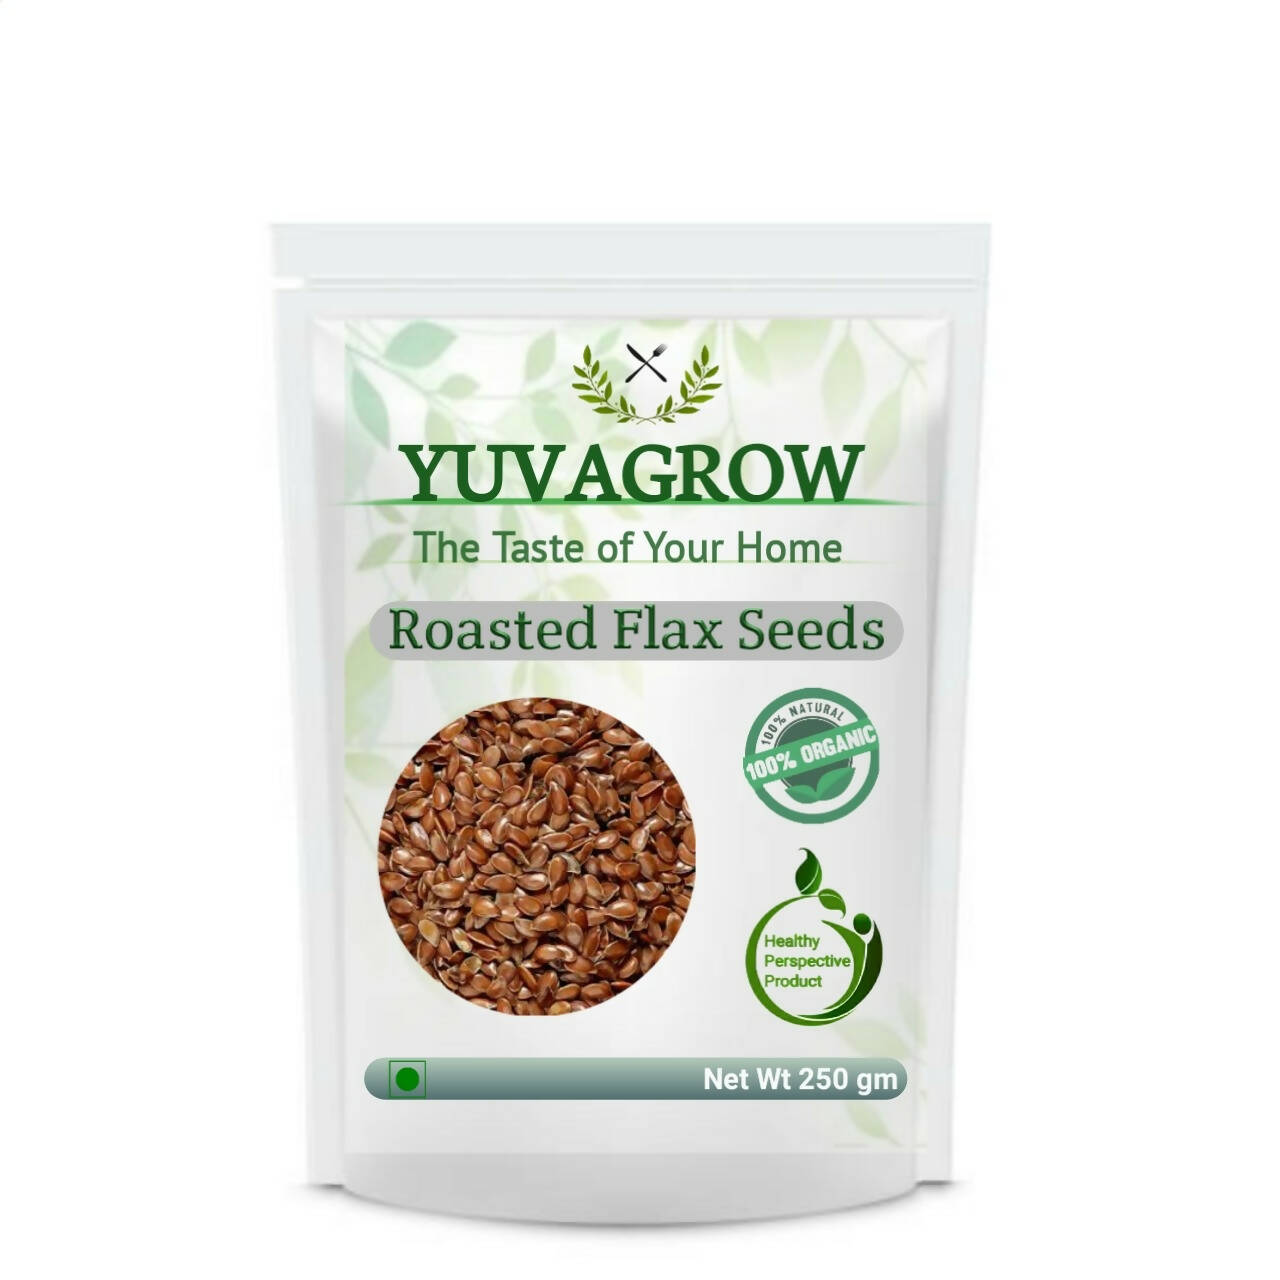 Yuvagrow Roasted Flax Seeds - buy in USA, Australia, Canada